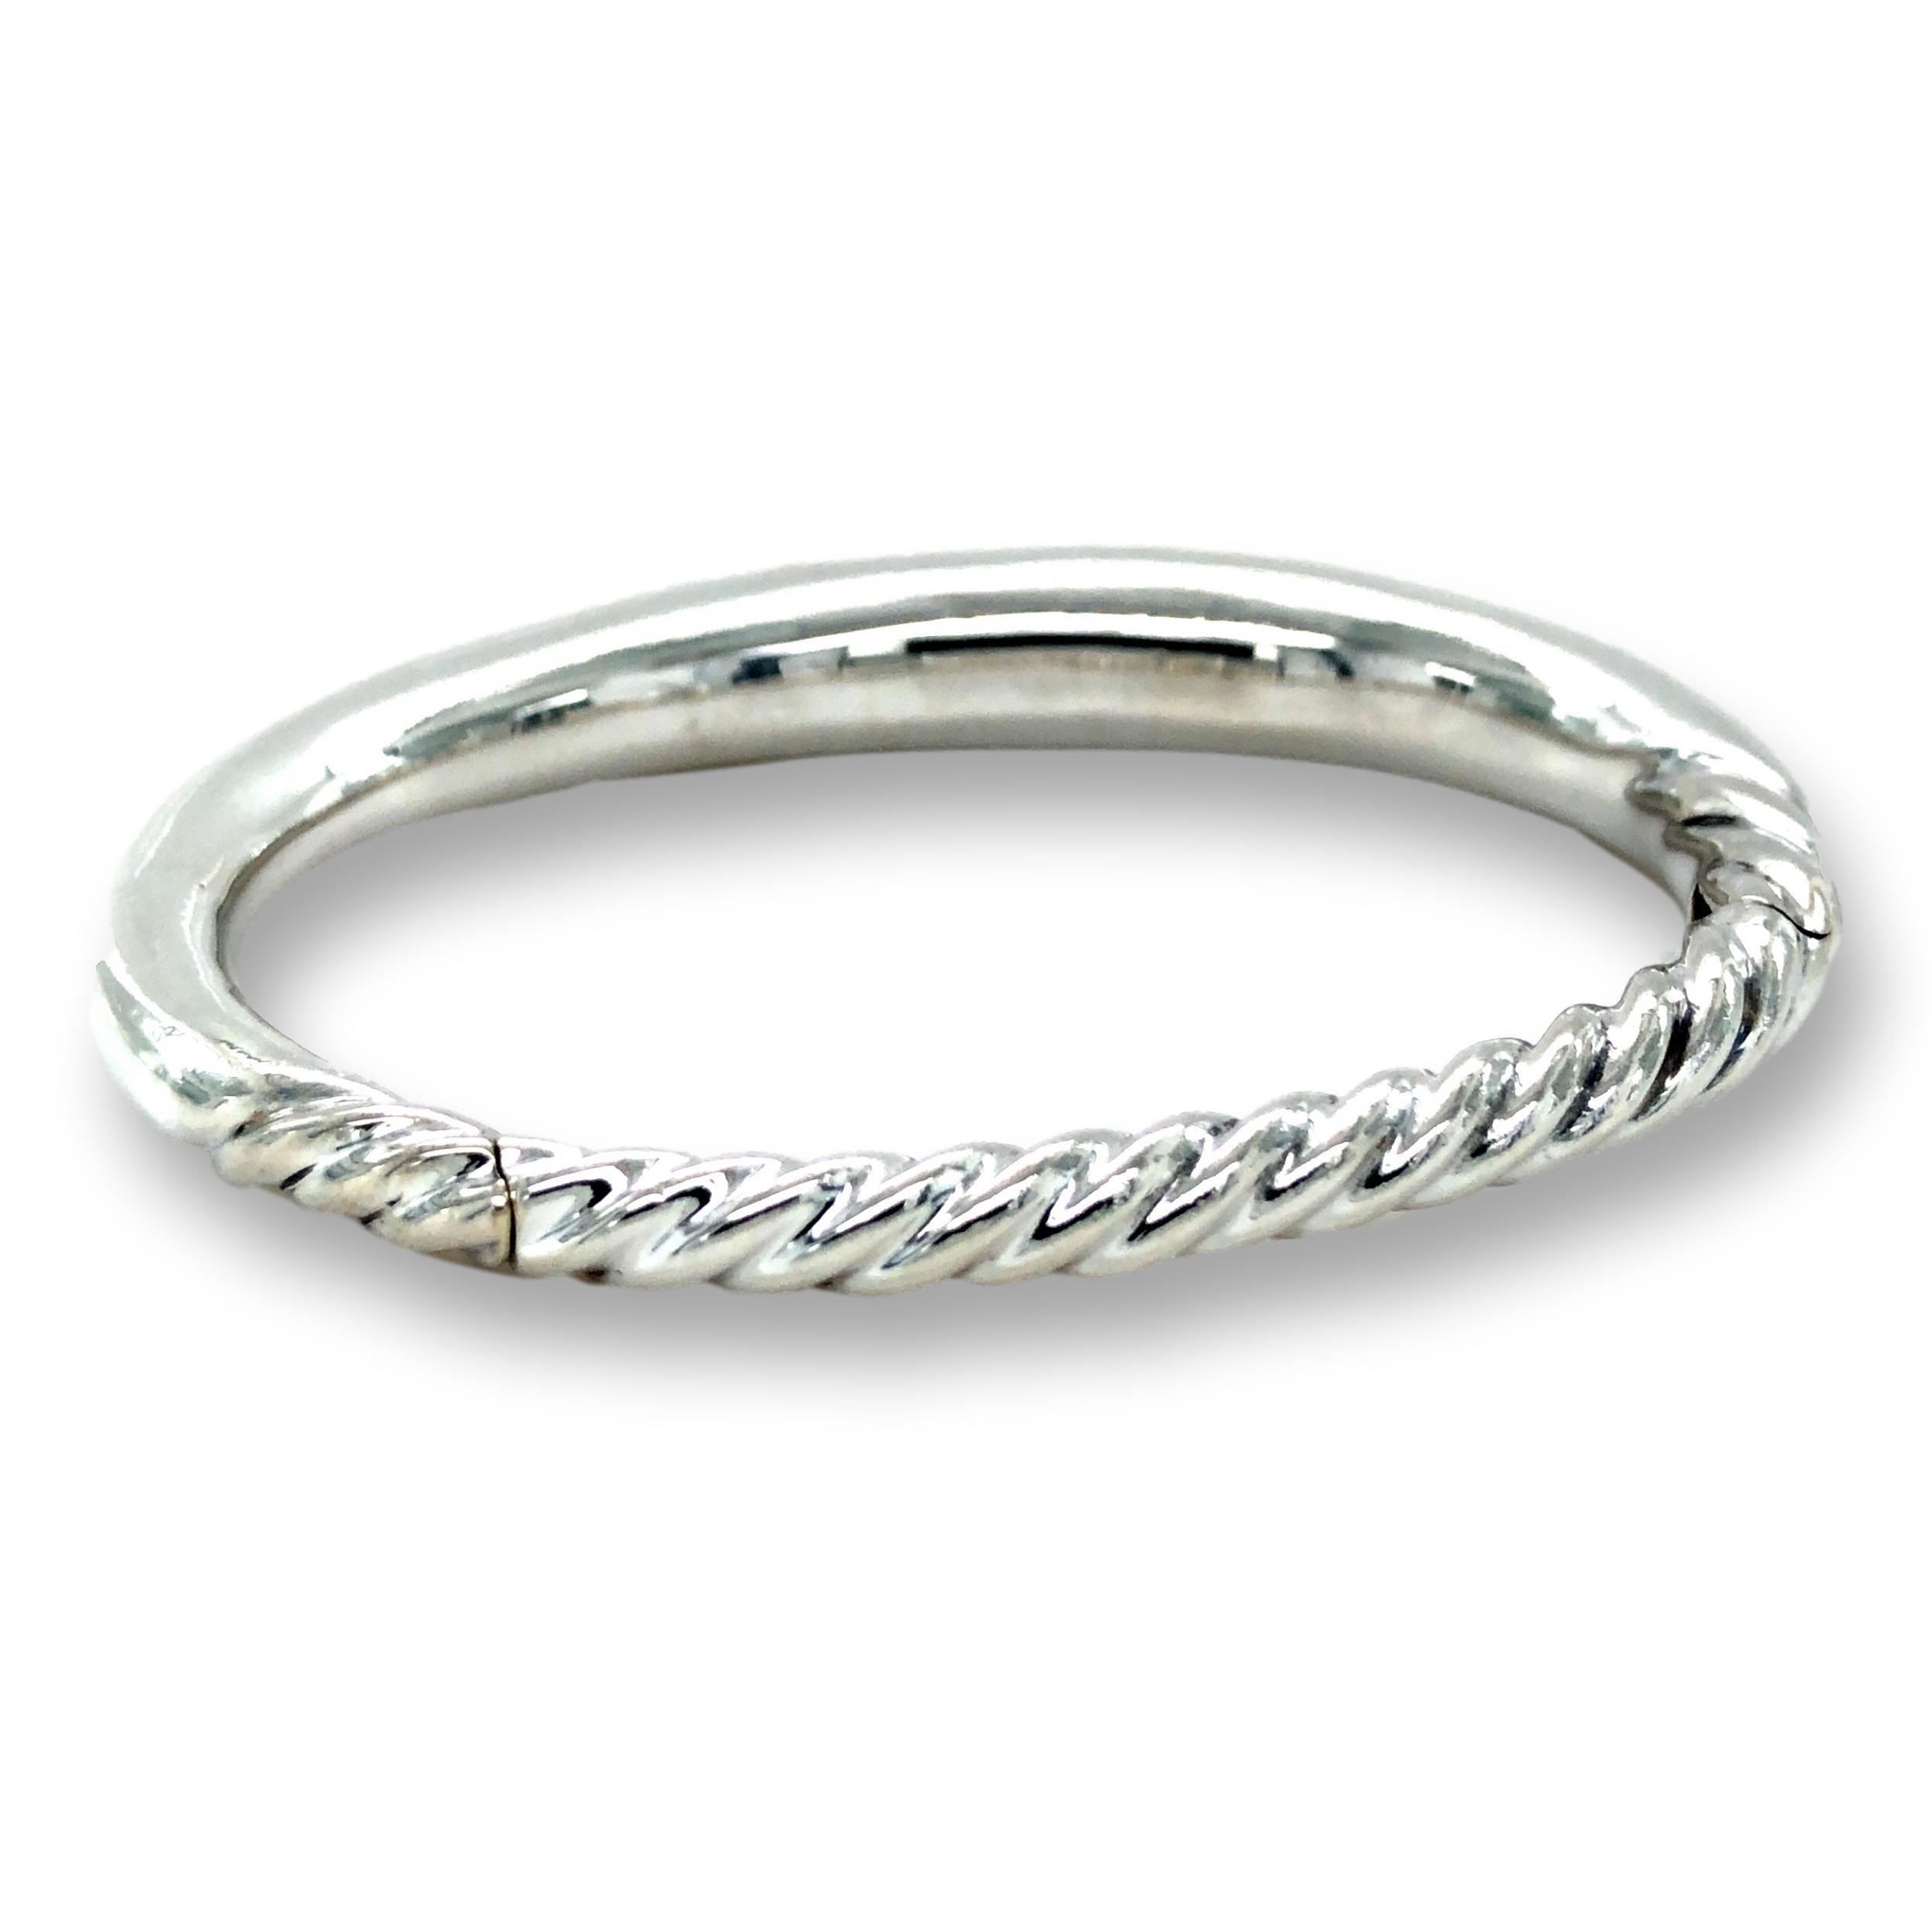 Modern David Yurman Pure Form Smooth Cable Bangle Bracelet, Medium